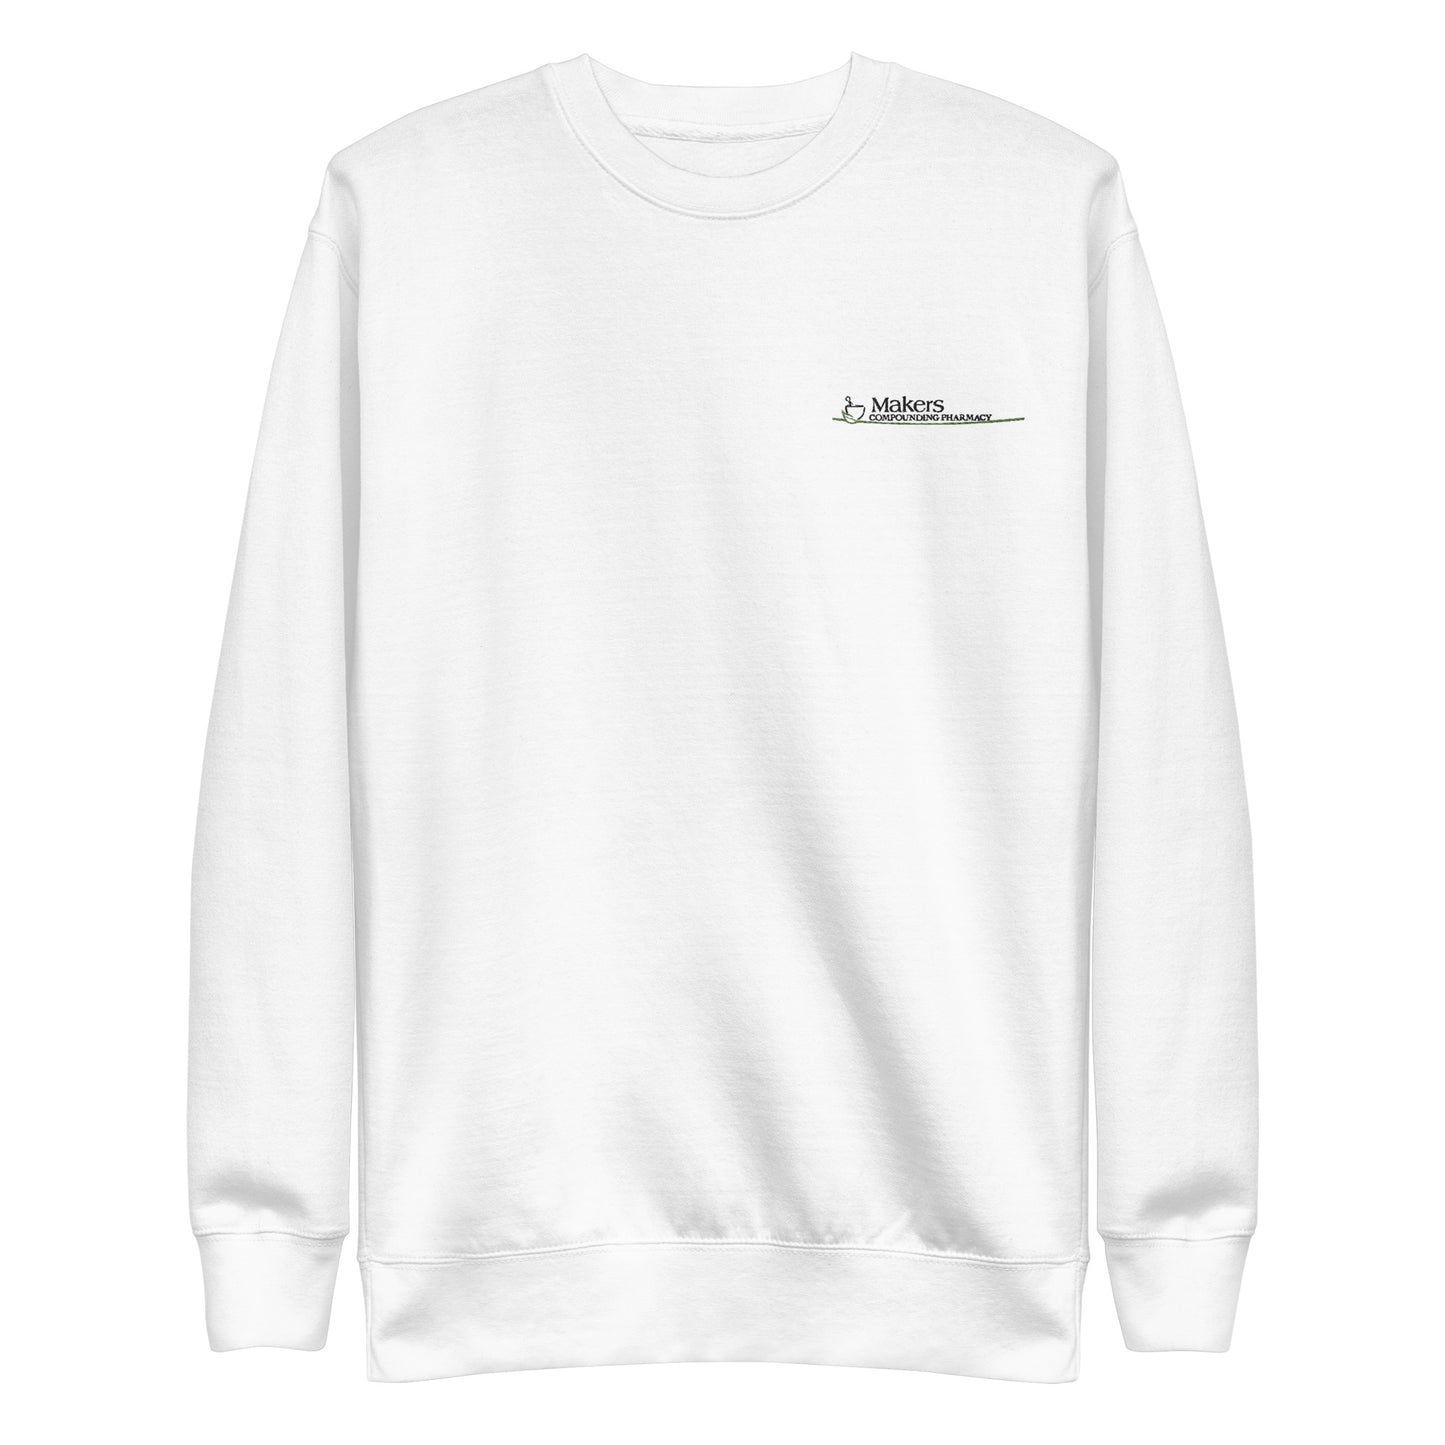 Unisex Premium Sweatshirt (fitted cut) - Makers